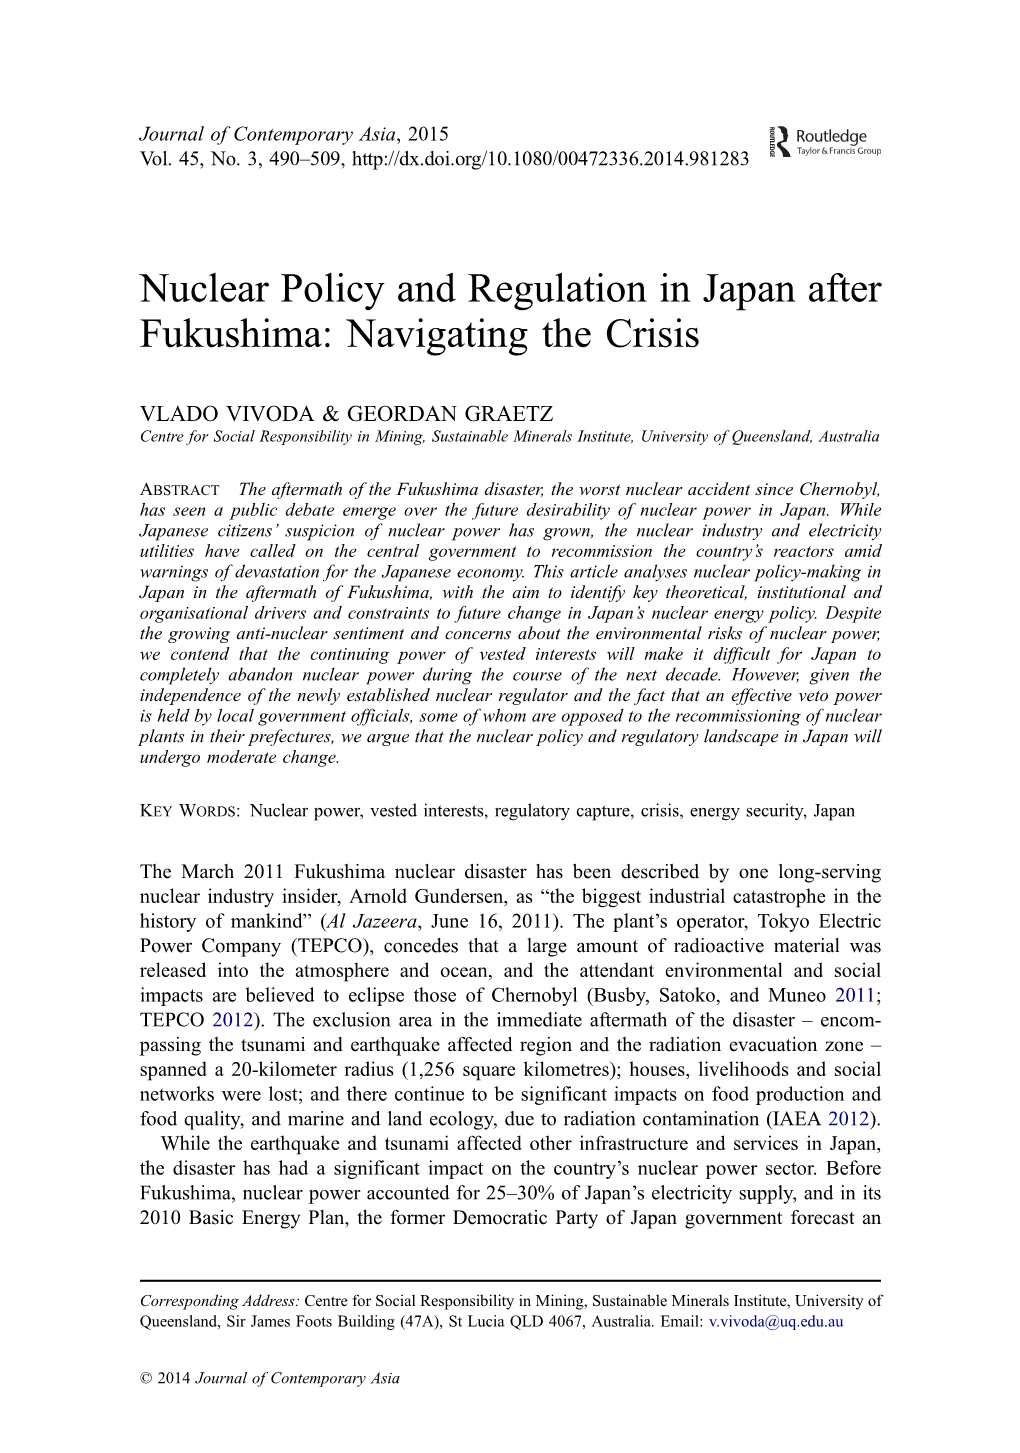 Nuclear Policy and Regulation in Japan After Fukushima: Navigating the Crisis